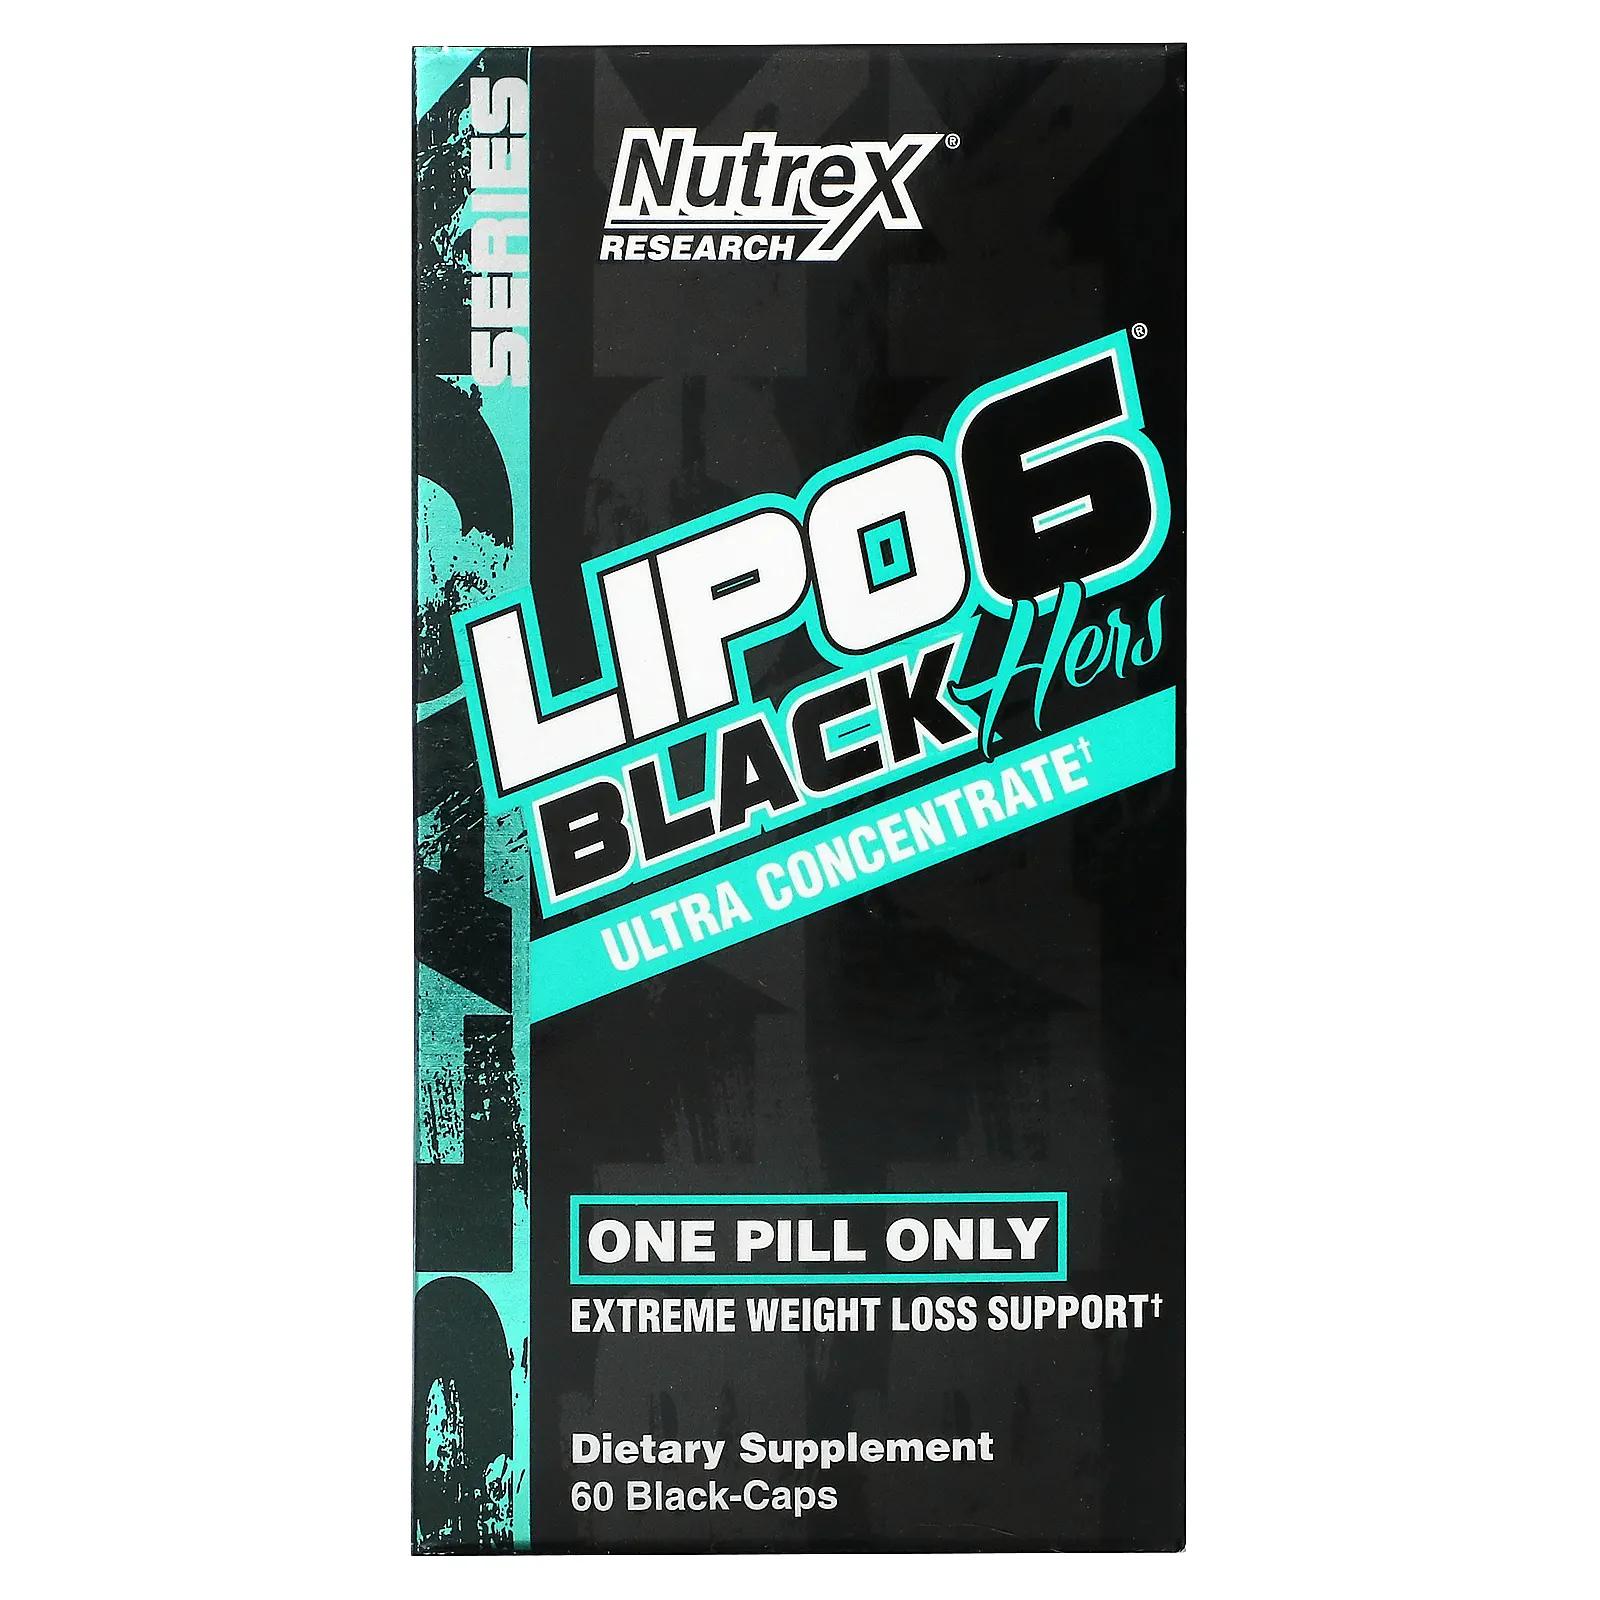 Nutrex Research Lipo-6 Black Hers ультраконцентрированный 60 черных капсул цена и фото